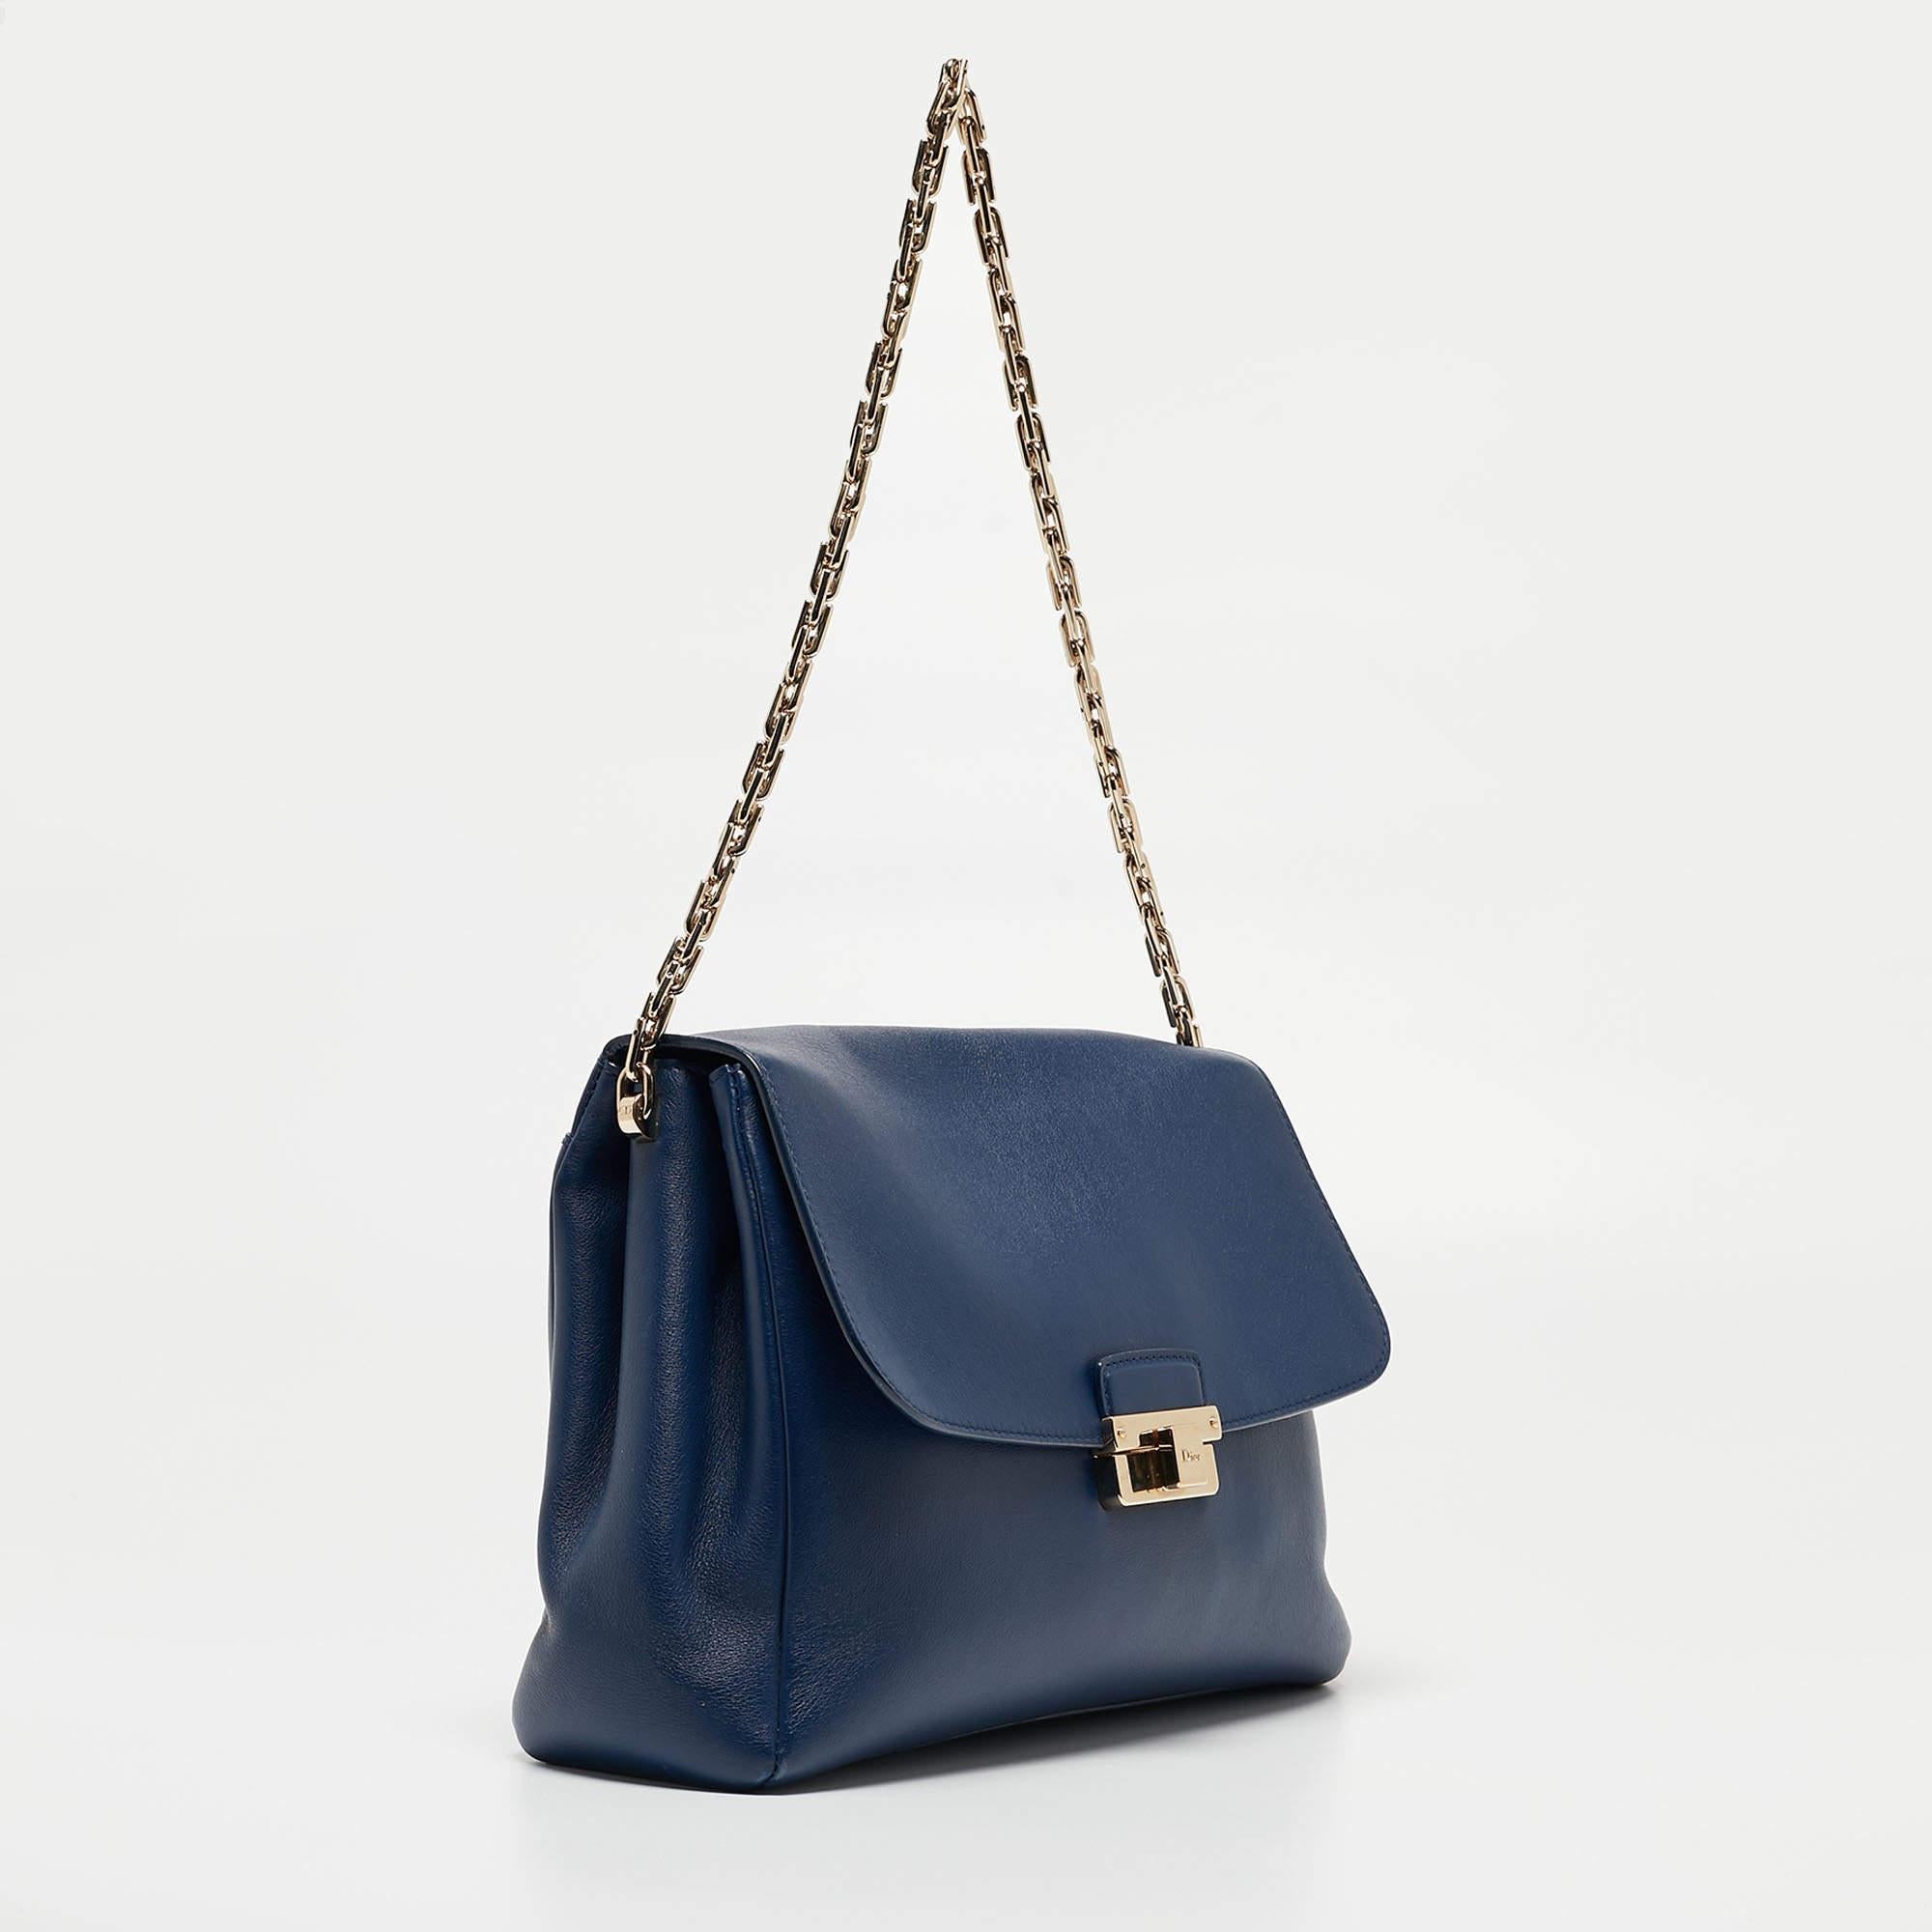 Dior Blue Leather Large Diorling Shoulder Bag In Good Condition For Sale In Dubai, Al Qouz 2